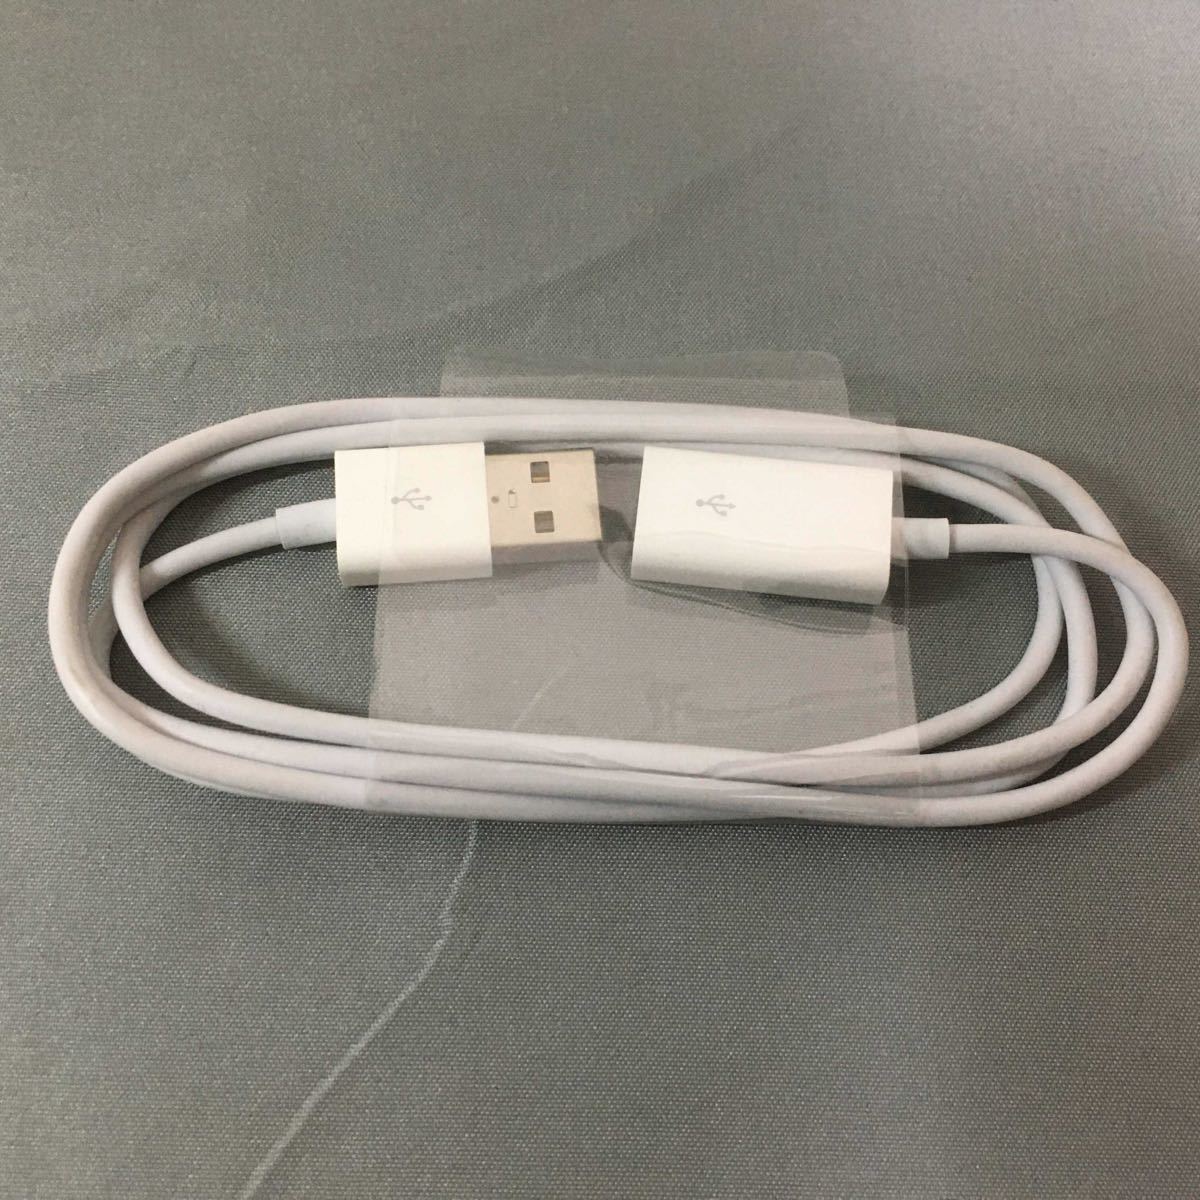 Apple アップル 純正 キーボードUSB延長ケーブル 1m 純正品 USBケーブル